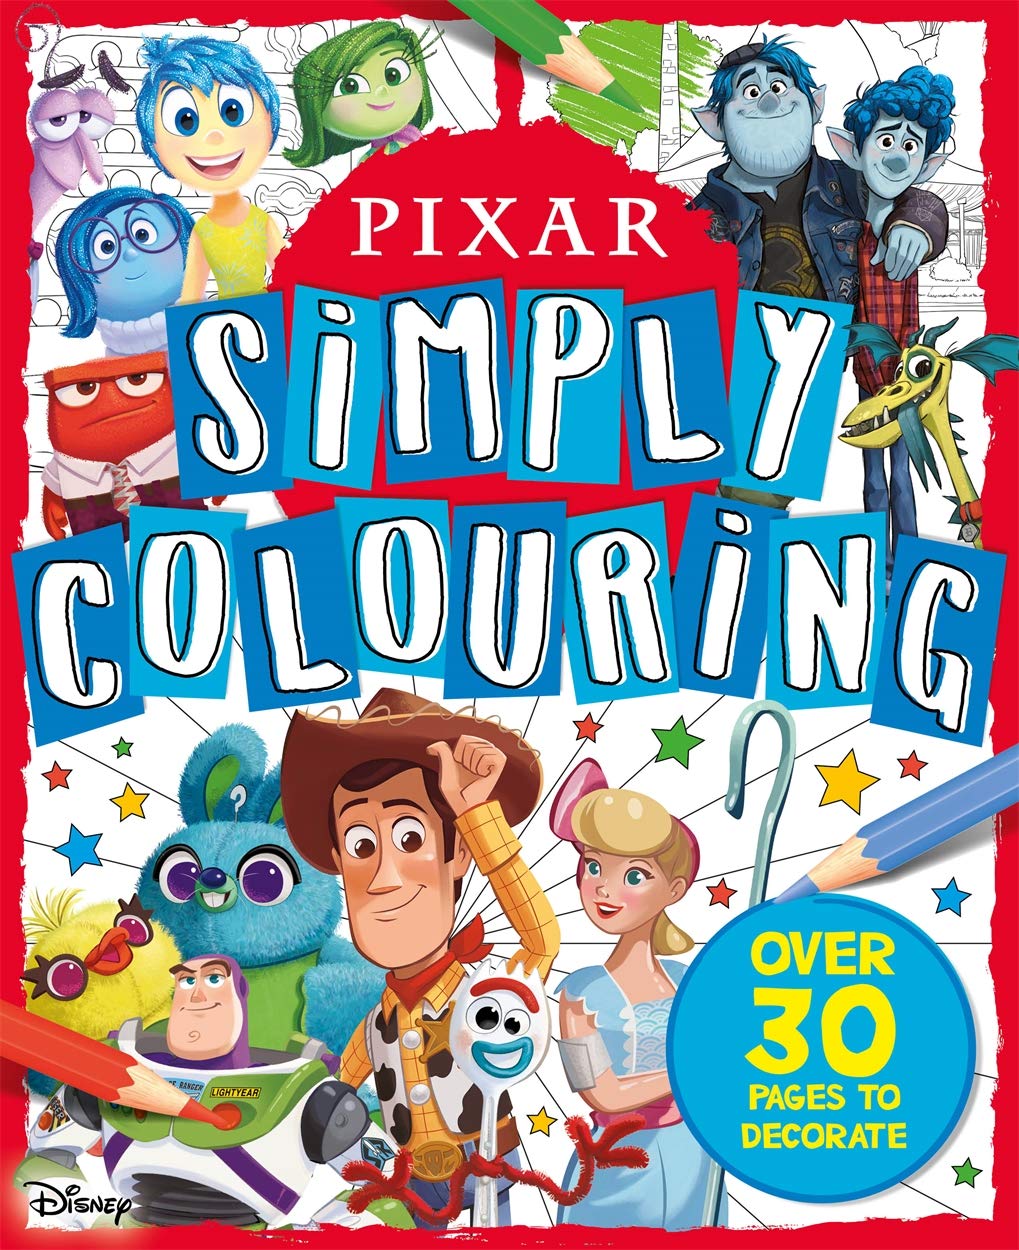 Pixar: Simply Colouring